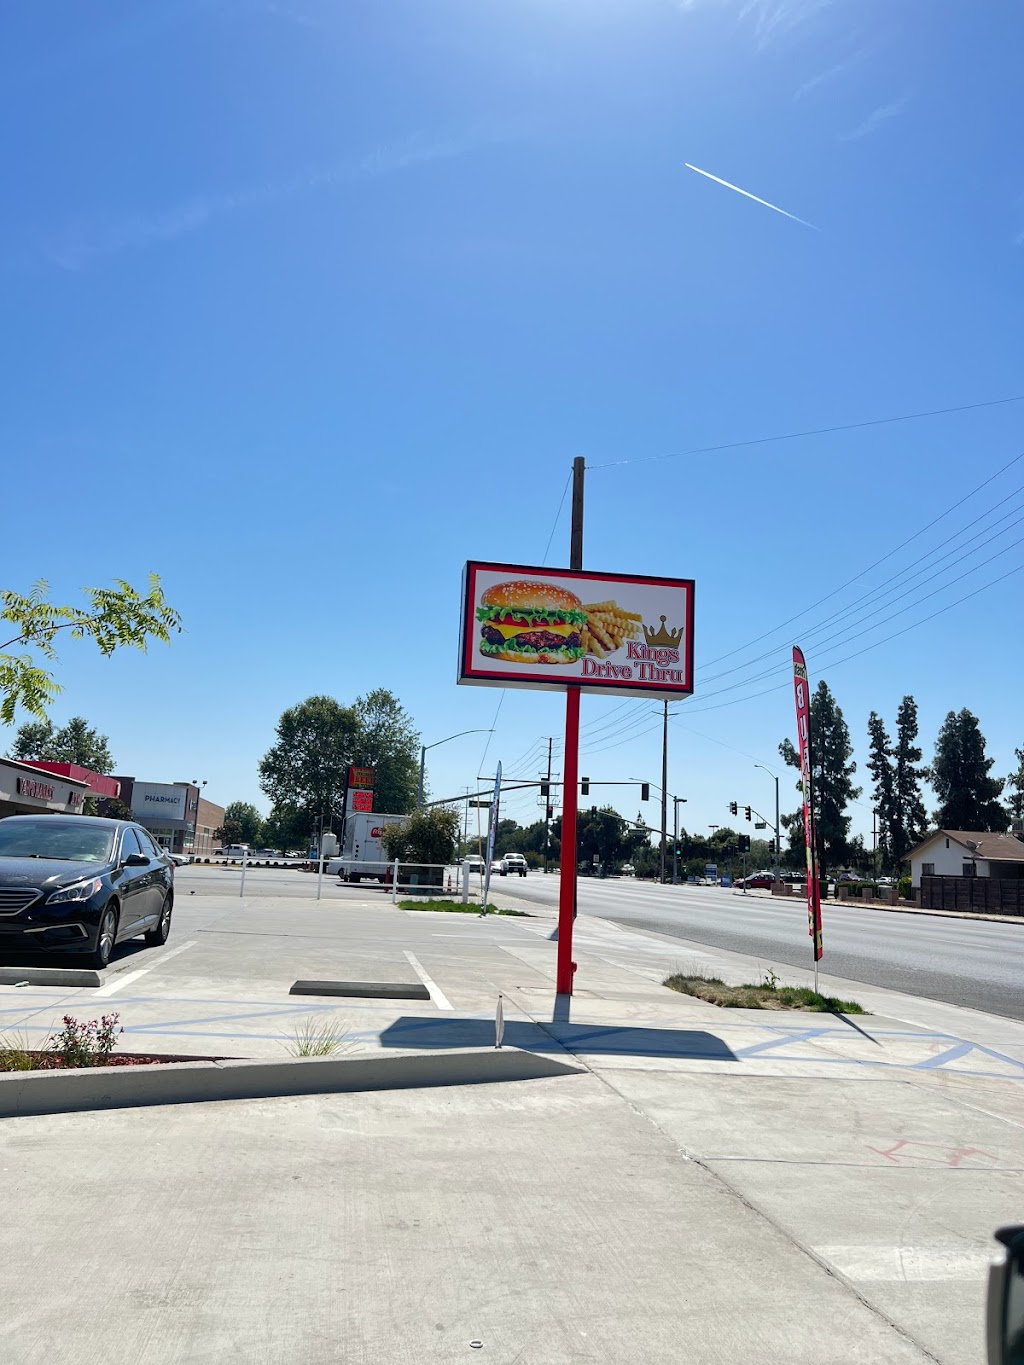 Kings Drive Thru | restaurant | 1749 Cecil Ave, Delano, CA 93215, USA